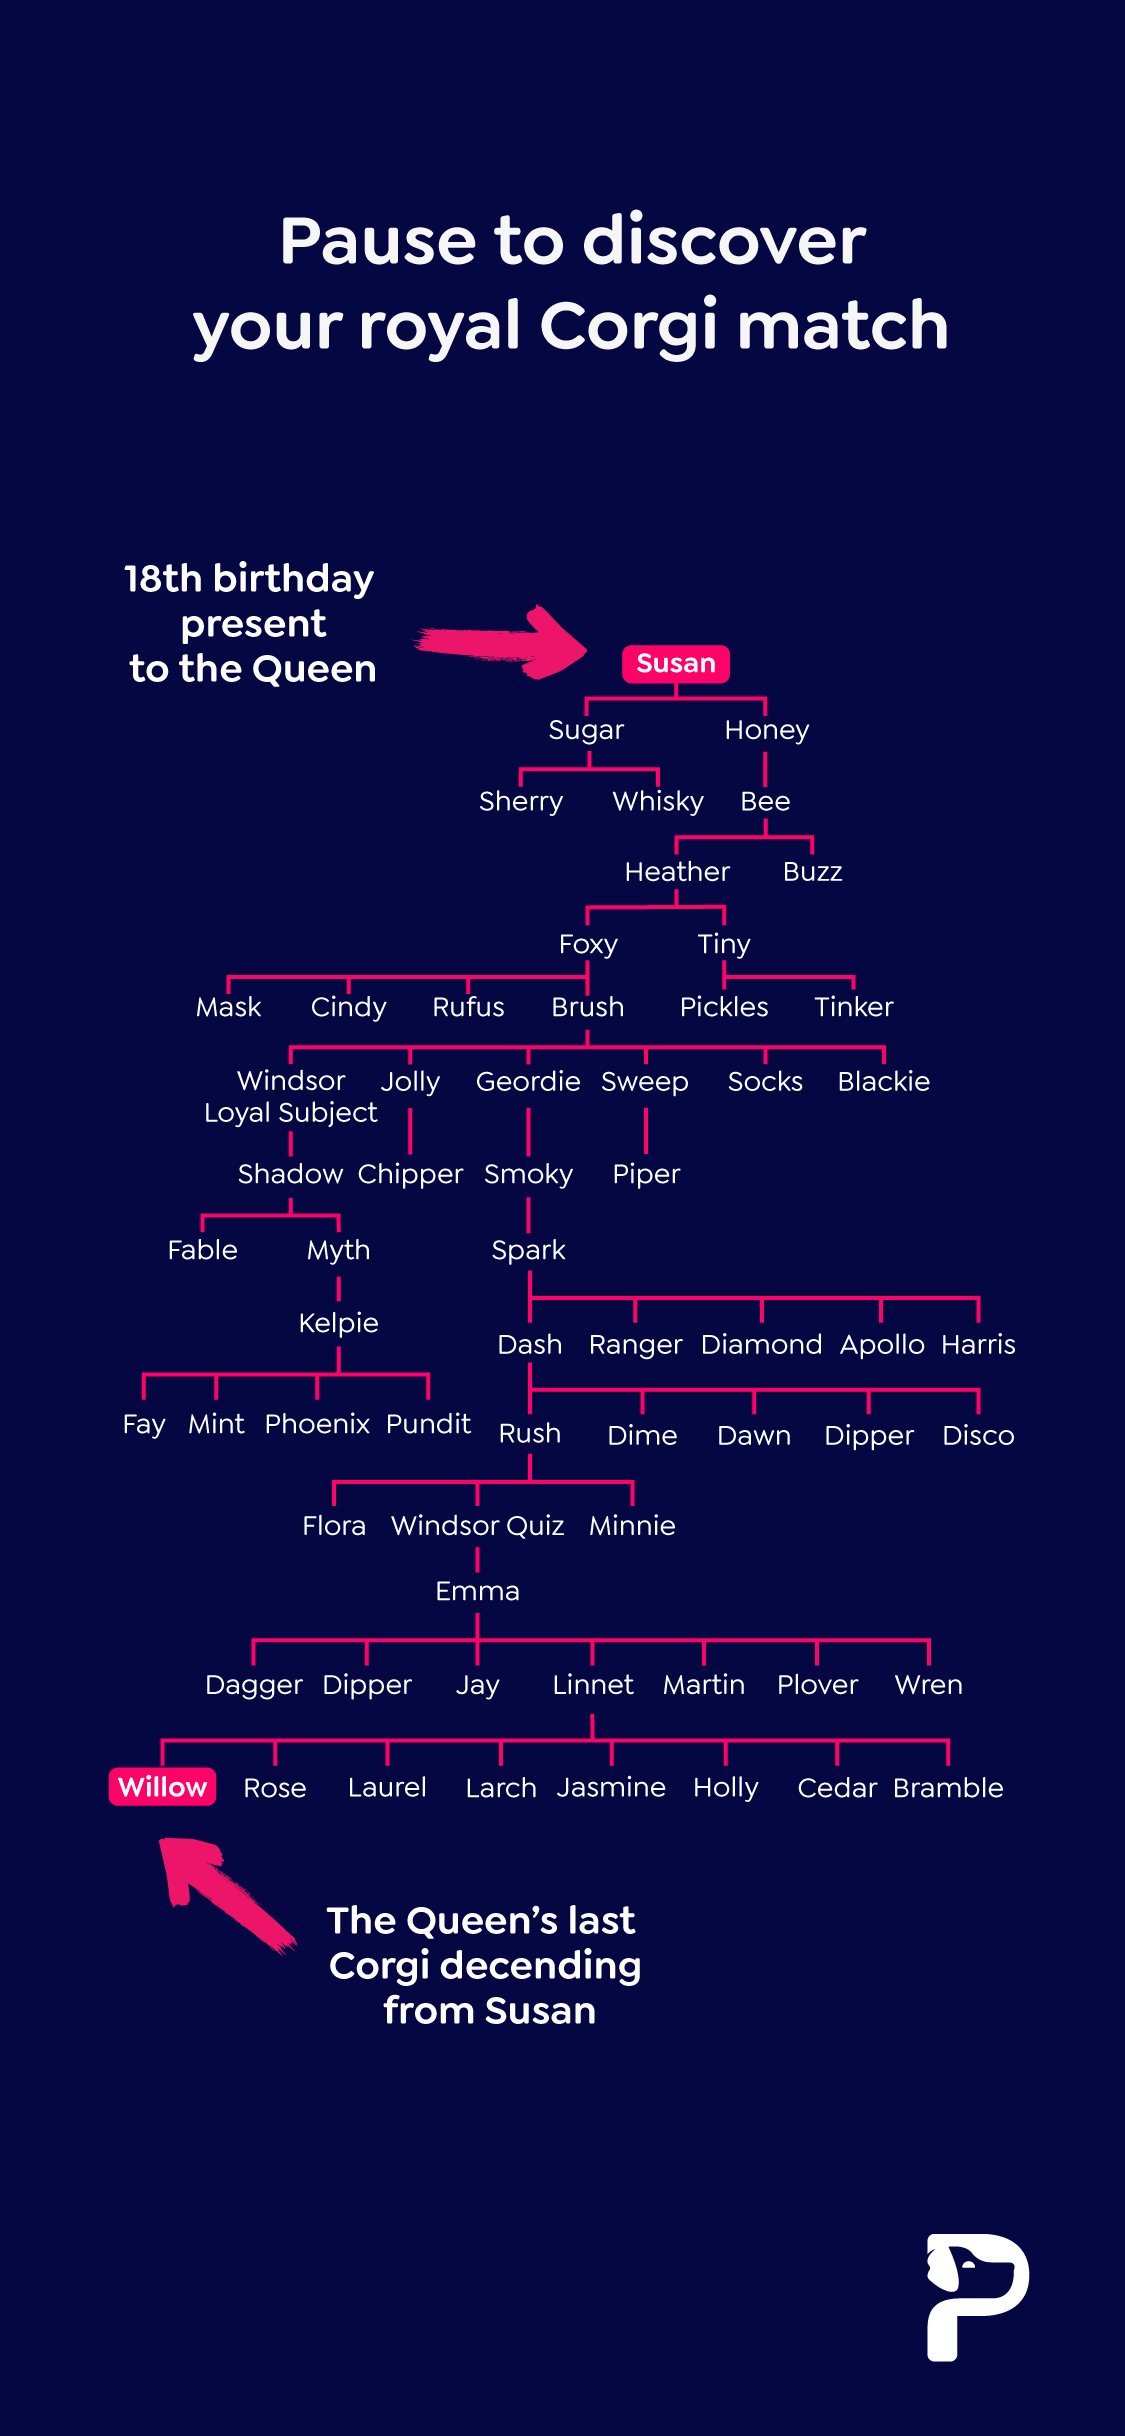 Queen Elizabeth II Corgi family tree